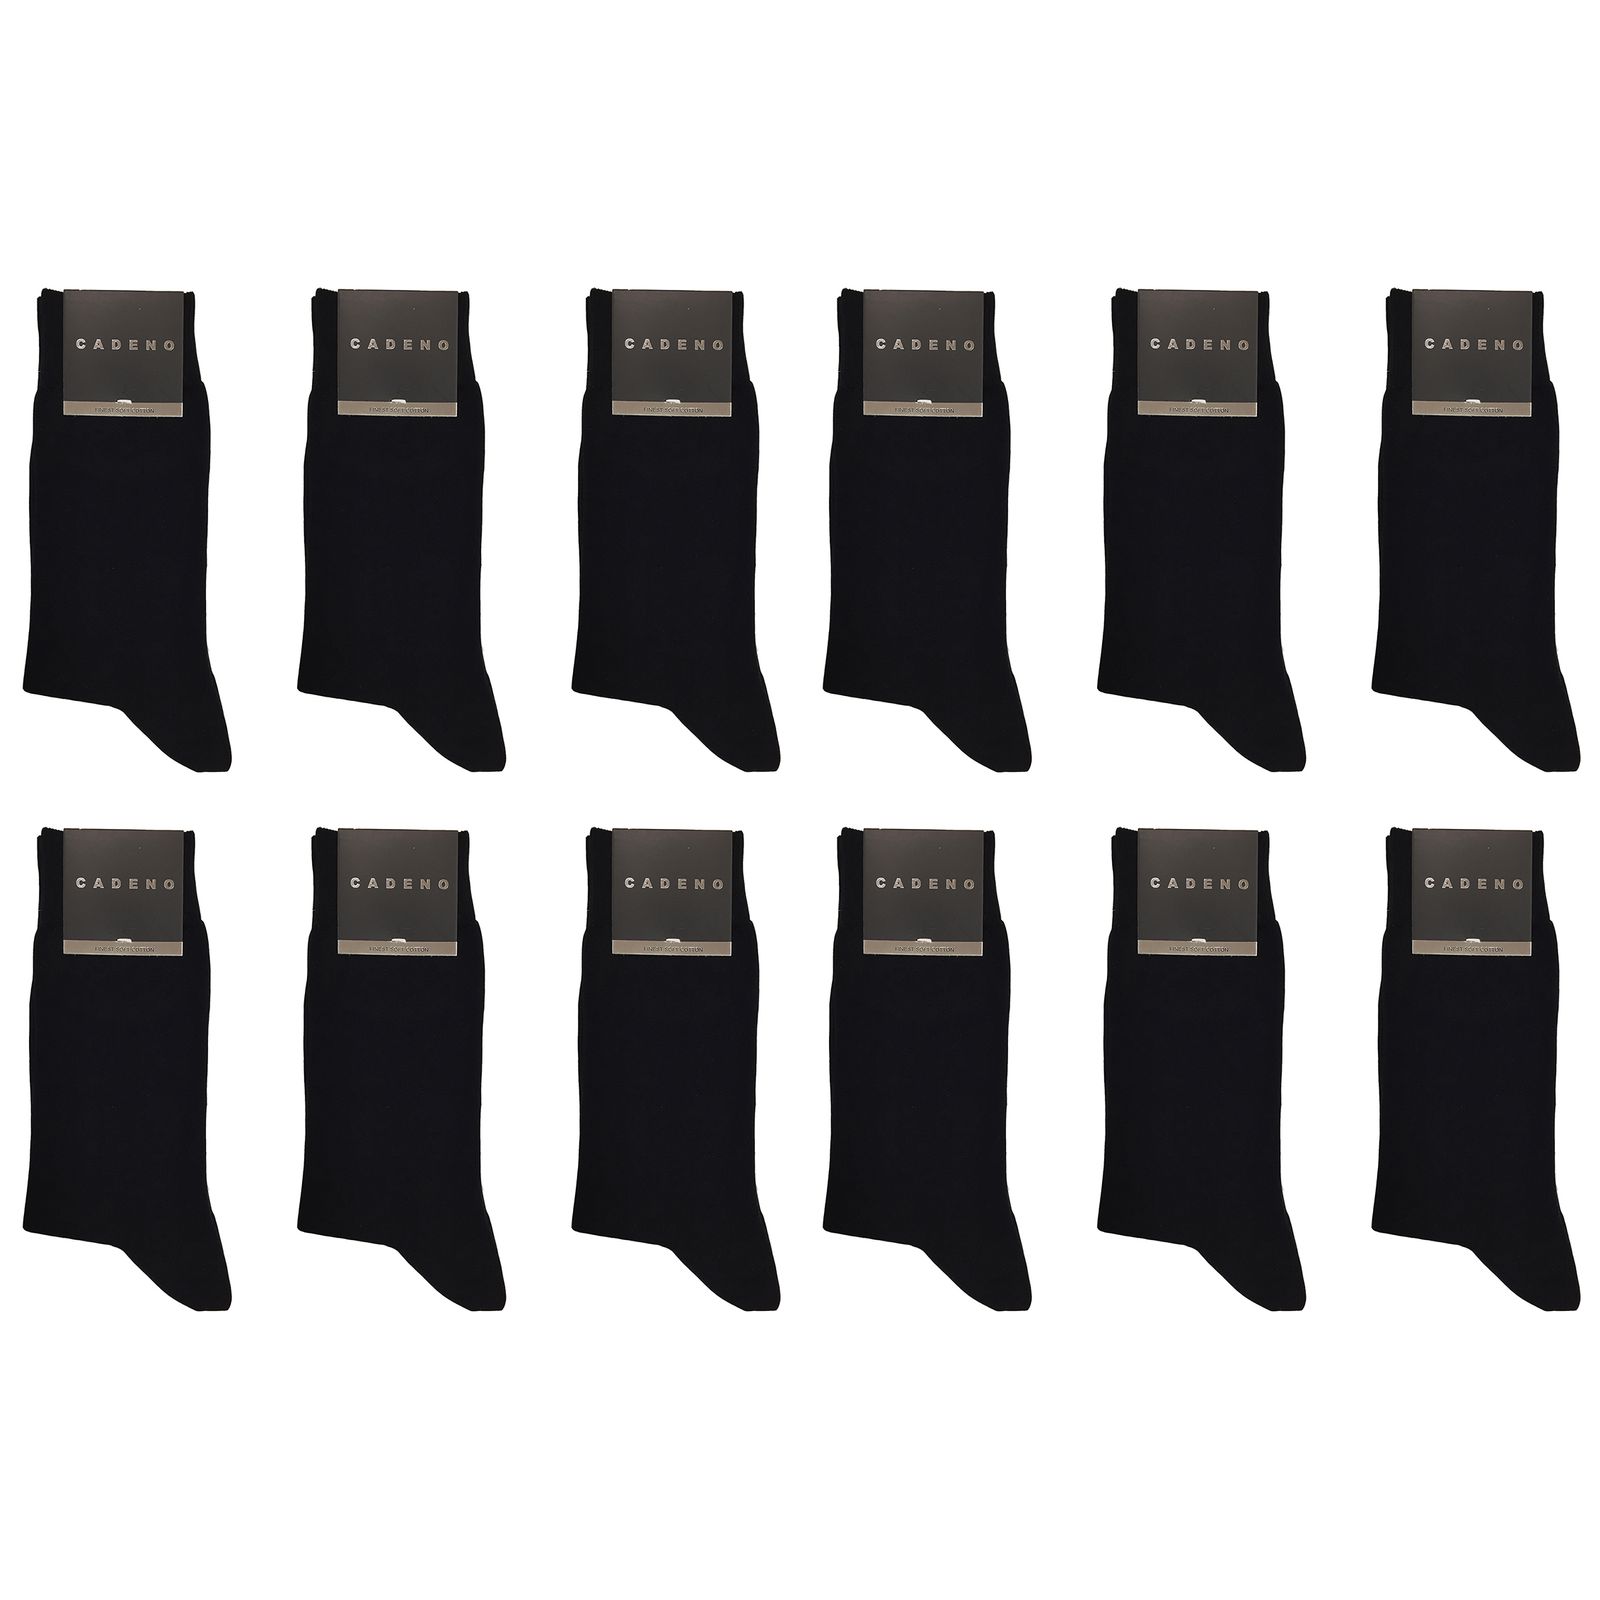 جوراب مردانه کادنو کد CA1101 بسته 12 عددی -  - 1